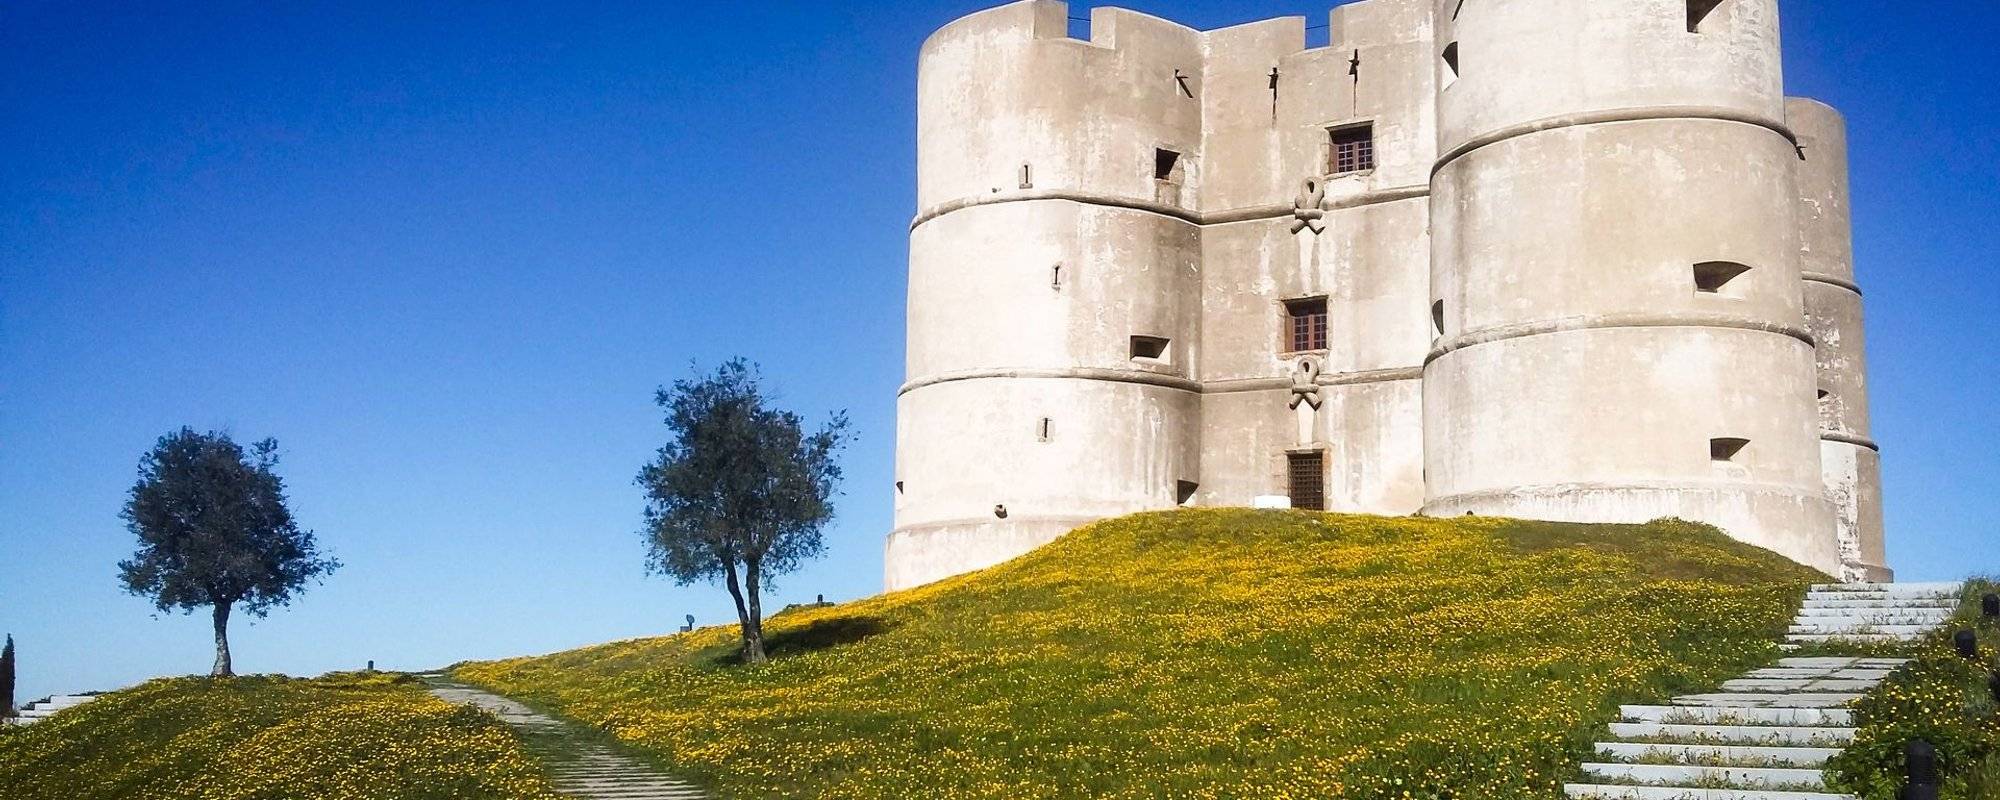 Portuguese castels - Castel of Evoramonte